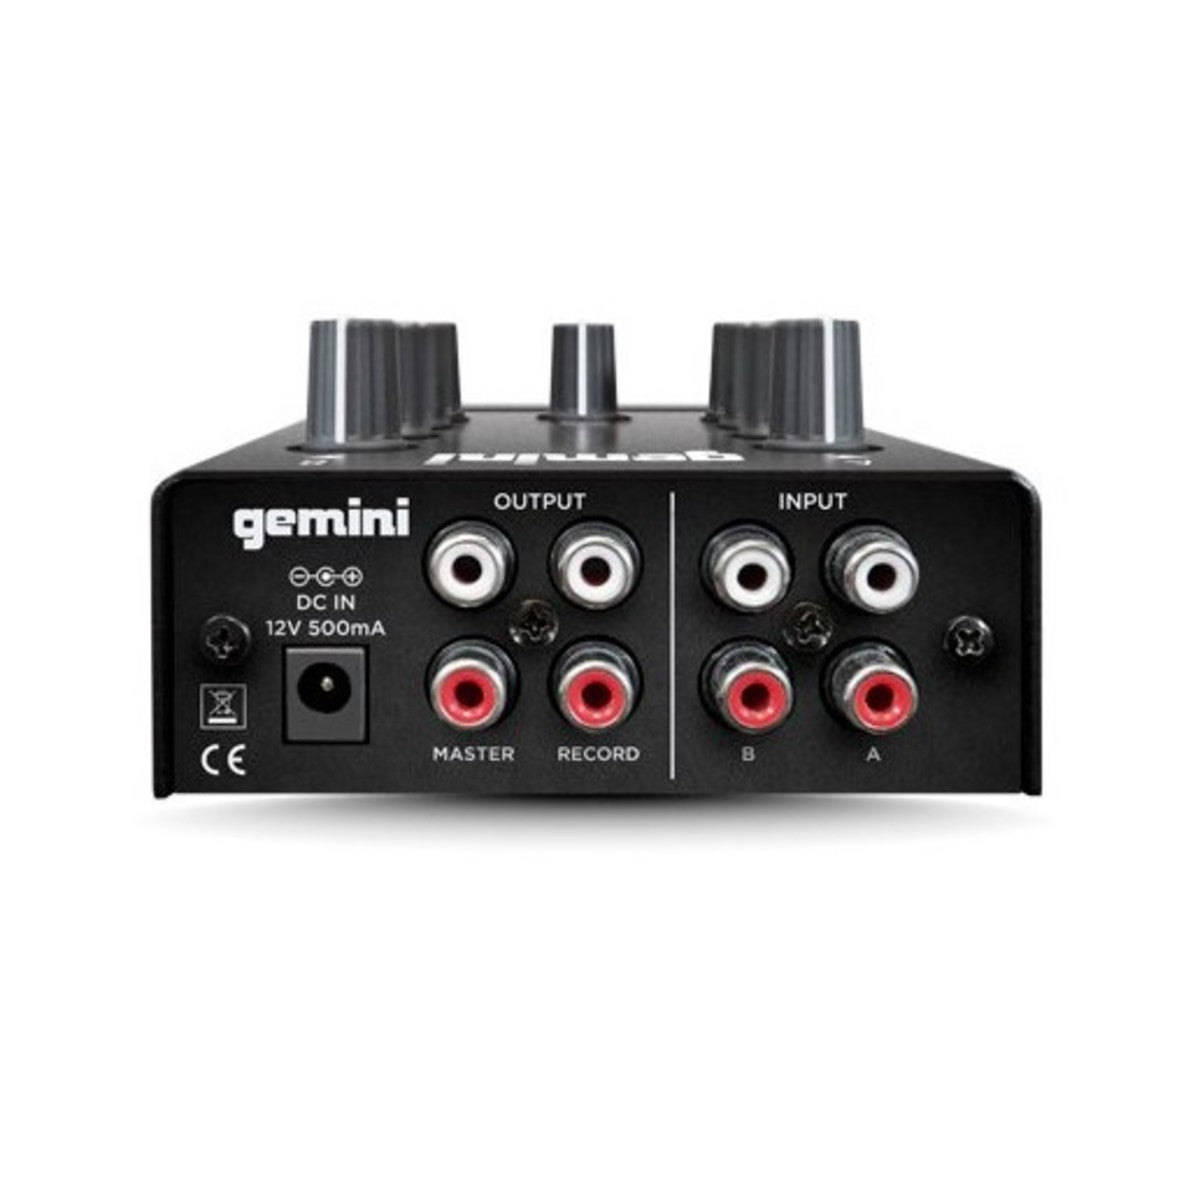 Gemini MM1 2 Channel Compact DJ Mixer - DY Pro Audio